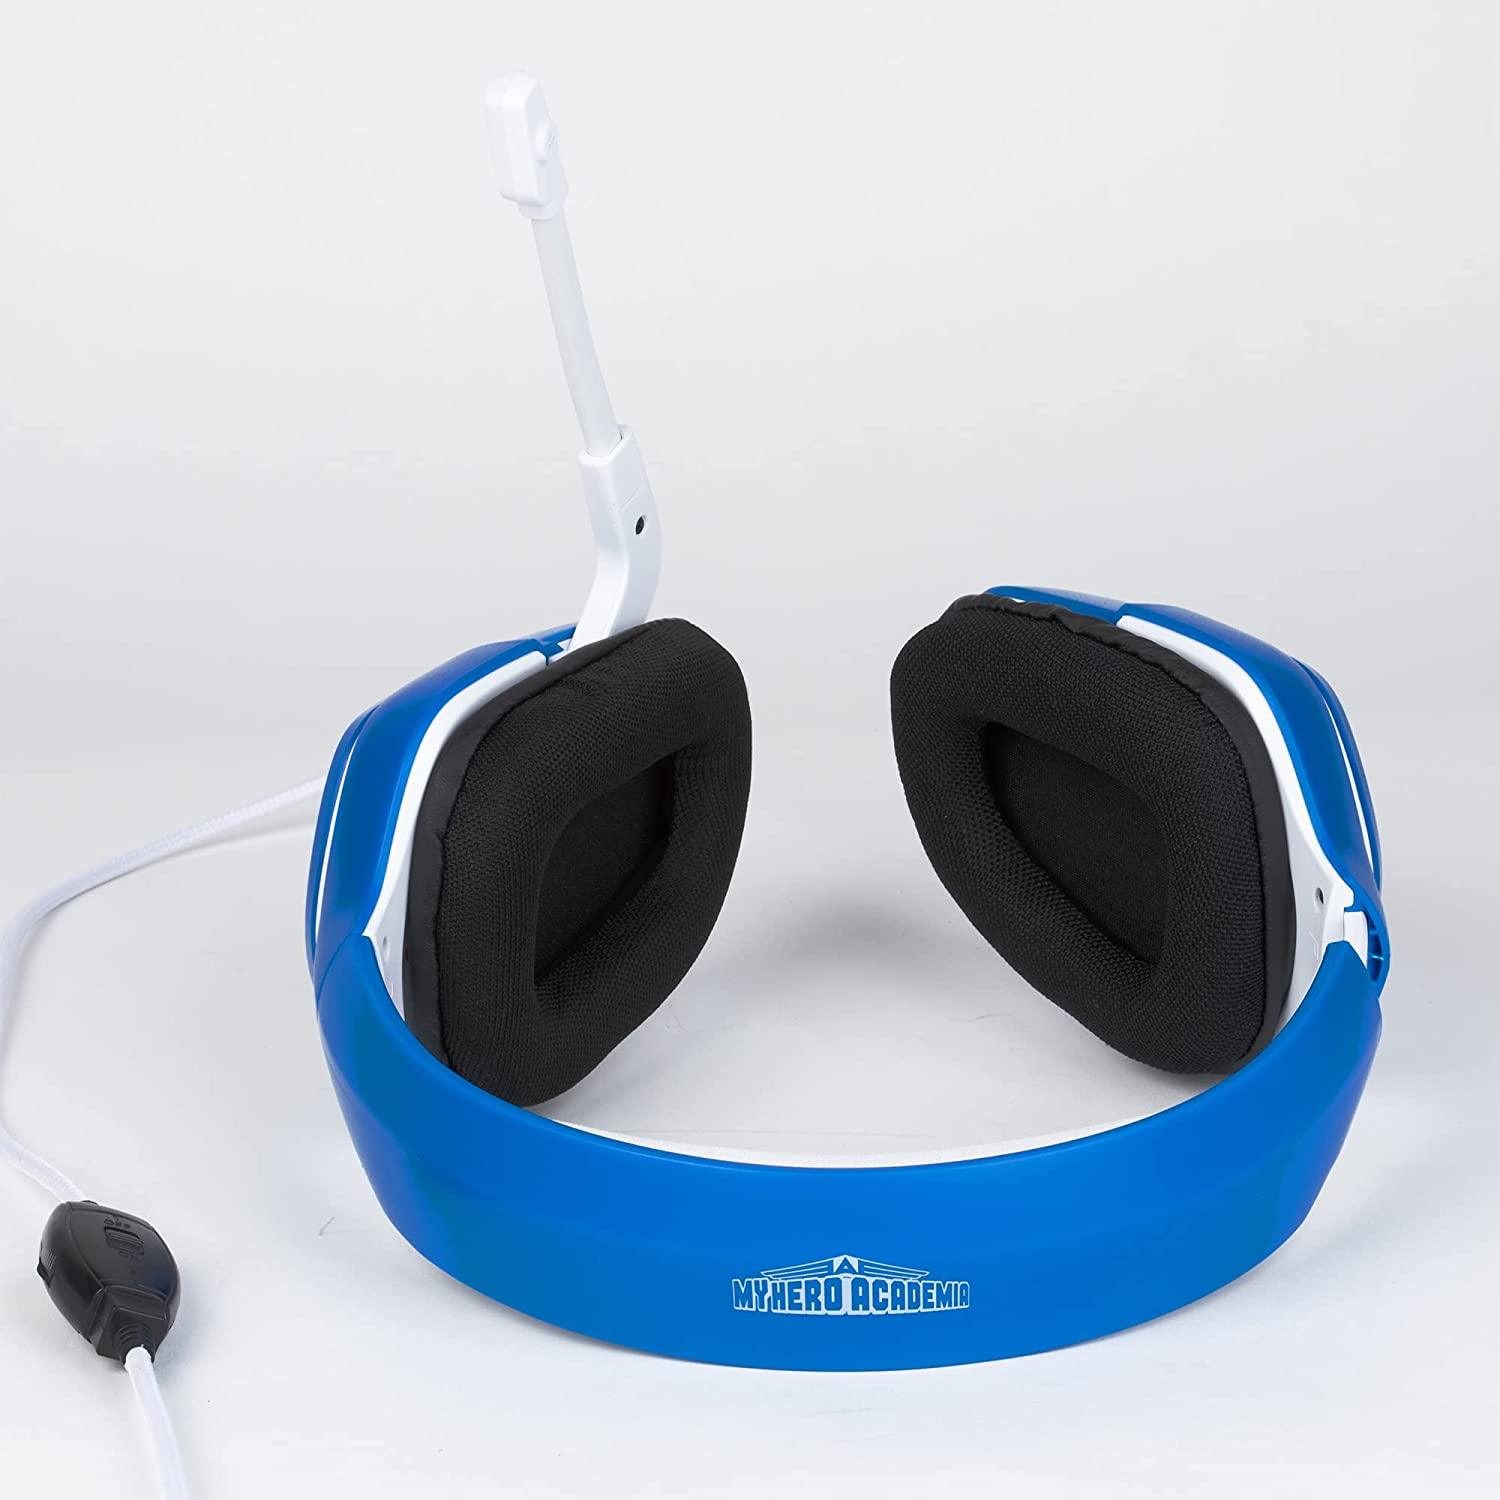 KONIX - My Hero Academia Gaming Headset - White/Blue - GameStore.mt | Powered by Flutisat